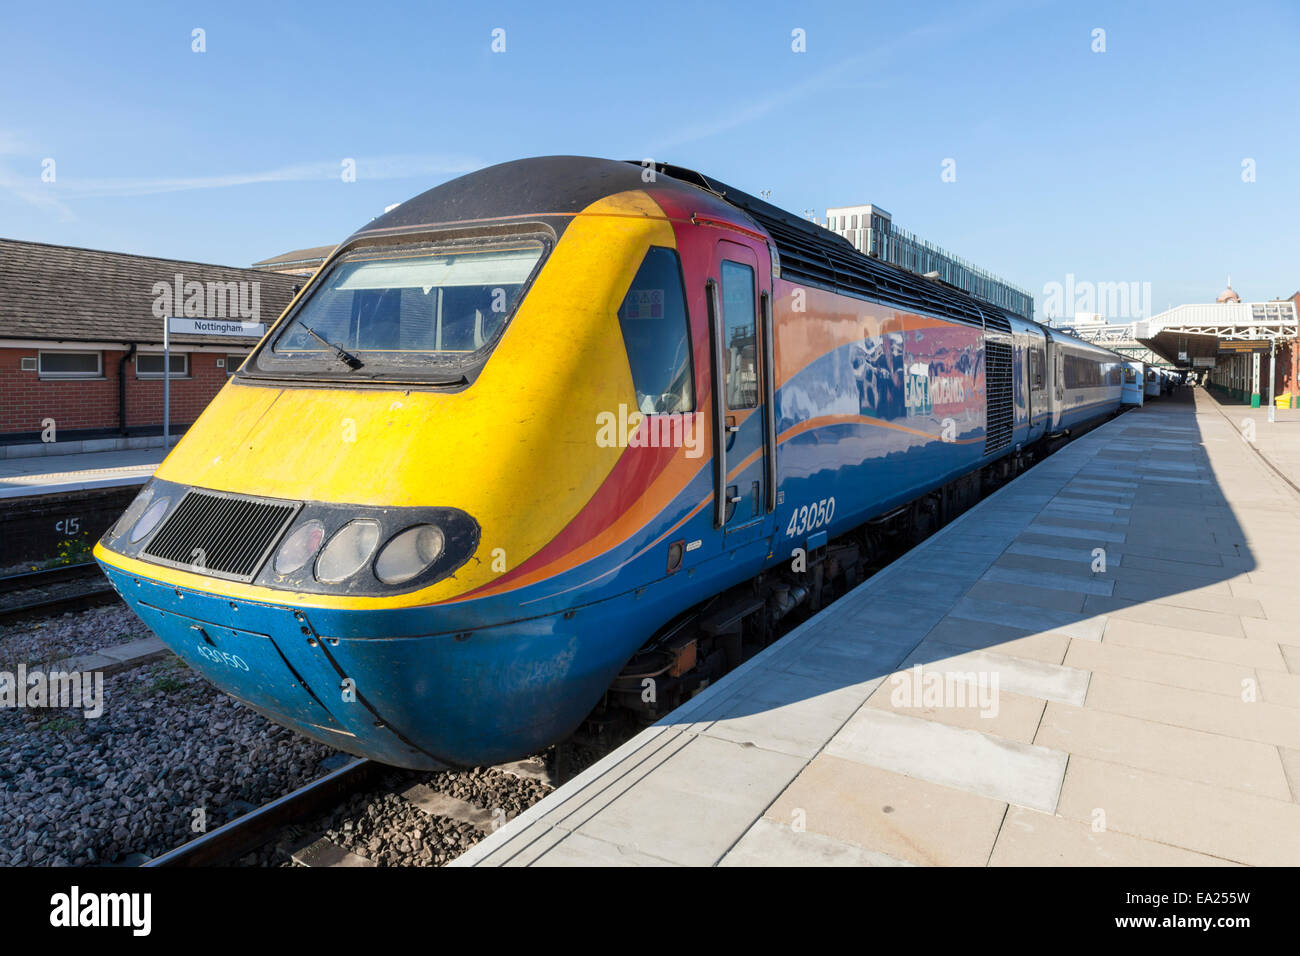 East Midlands Trains high speed train (HST) at Nottingham Railway Station, Nottingham, England, UK Stock Photo